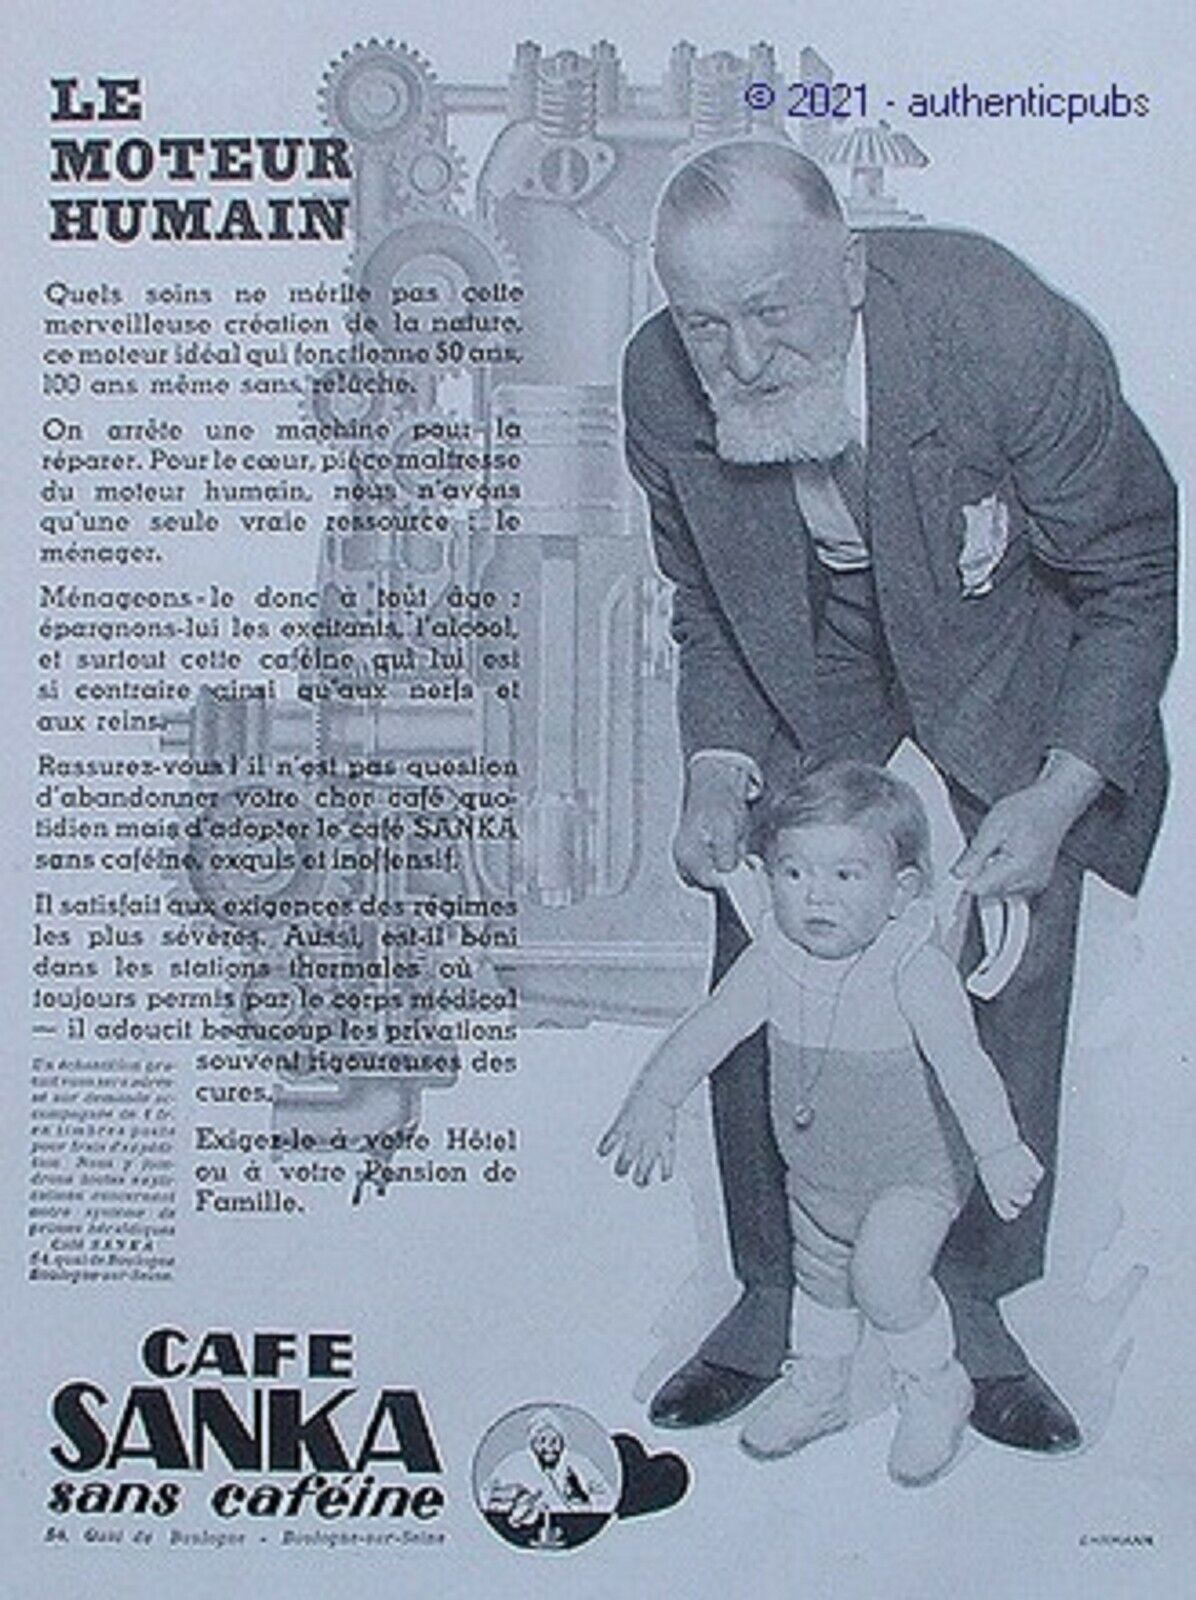 1931 AD CAFFEINATED SANKA COFFEE AD GRAND FATHER GIRL BABY HUMAN MOTOR